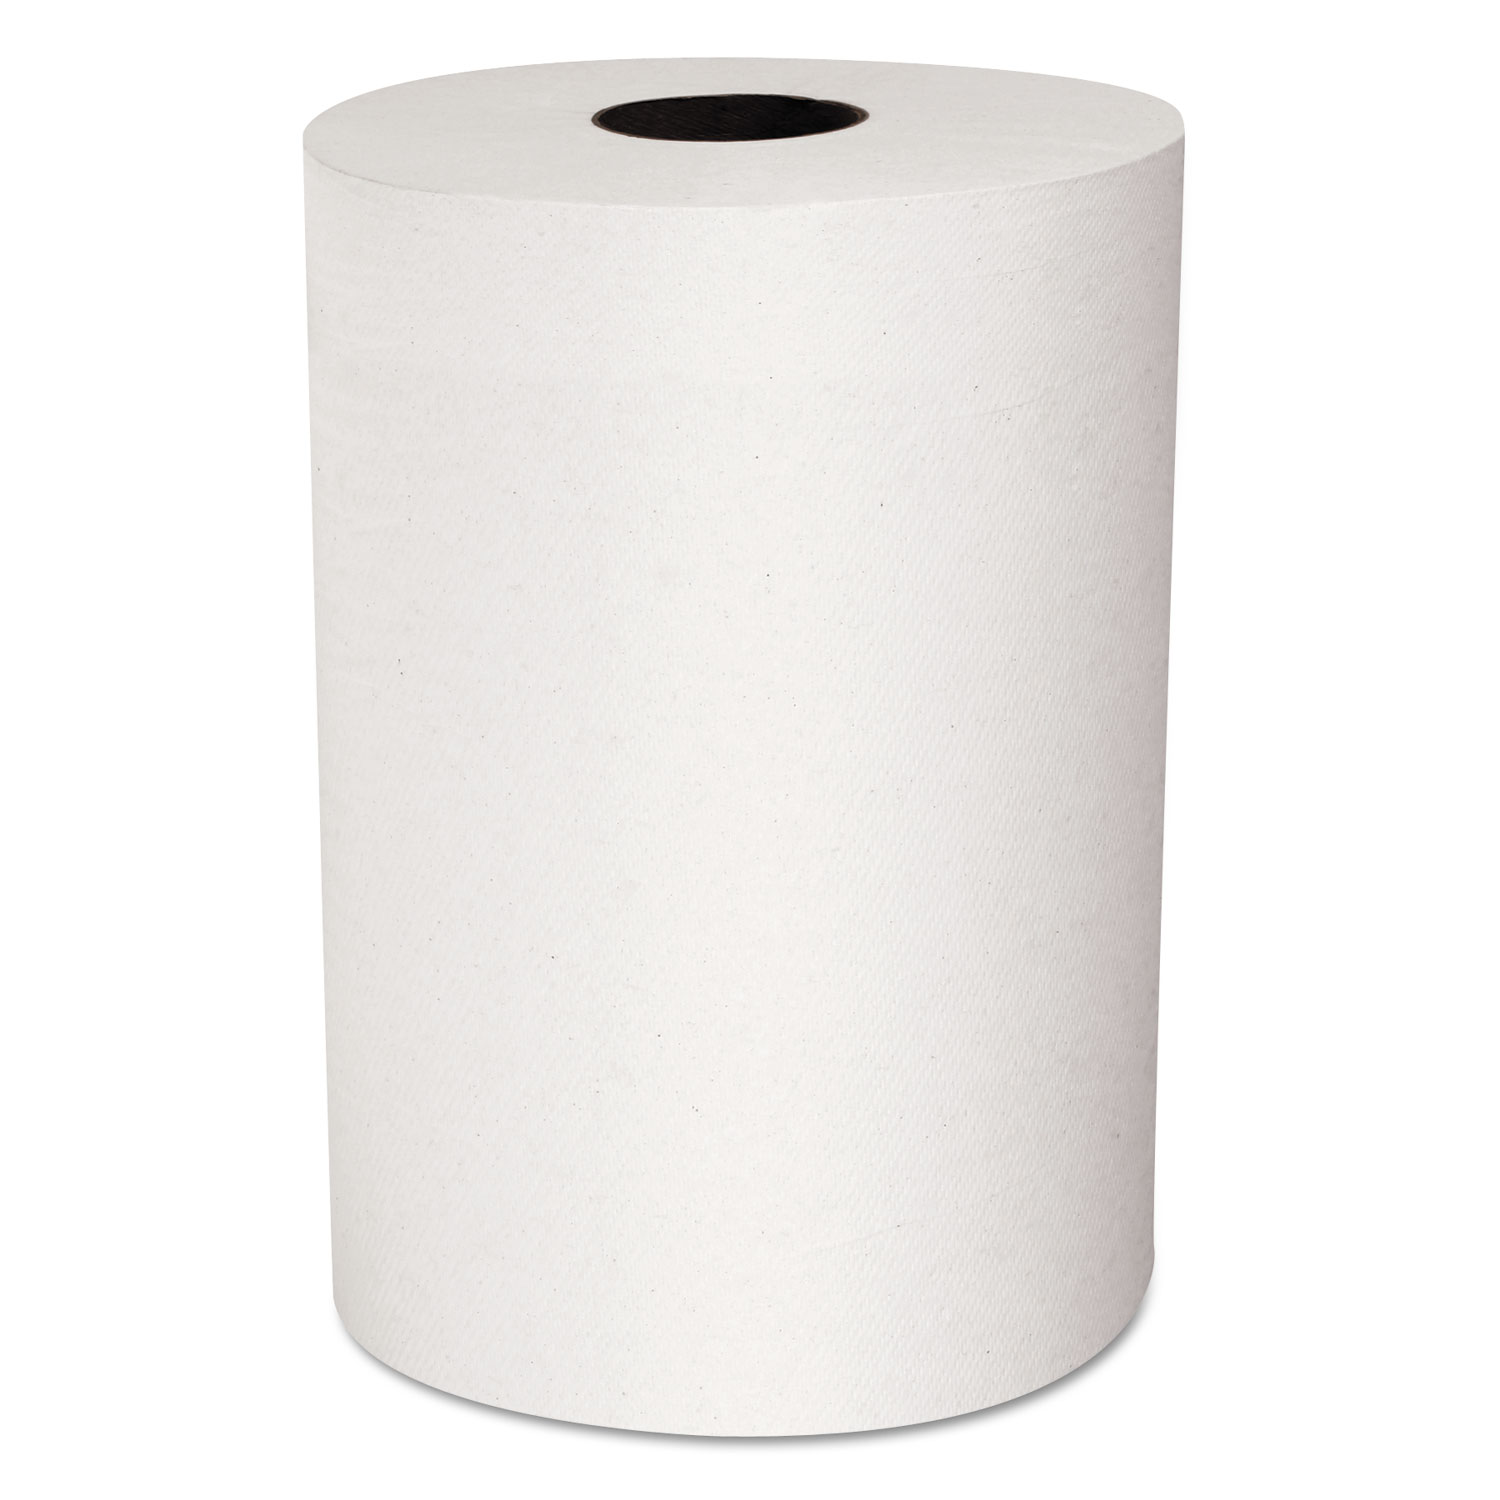  Scott 12388 Control Slimroll Towels, Absorbency Pockets, 8 x 580ft, White, 6 Rolls/Carton (KCC12388) 